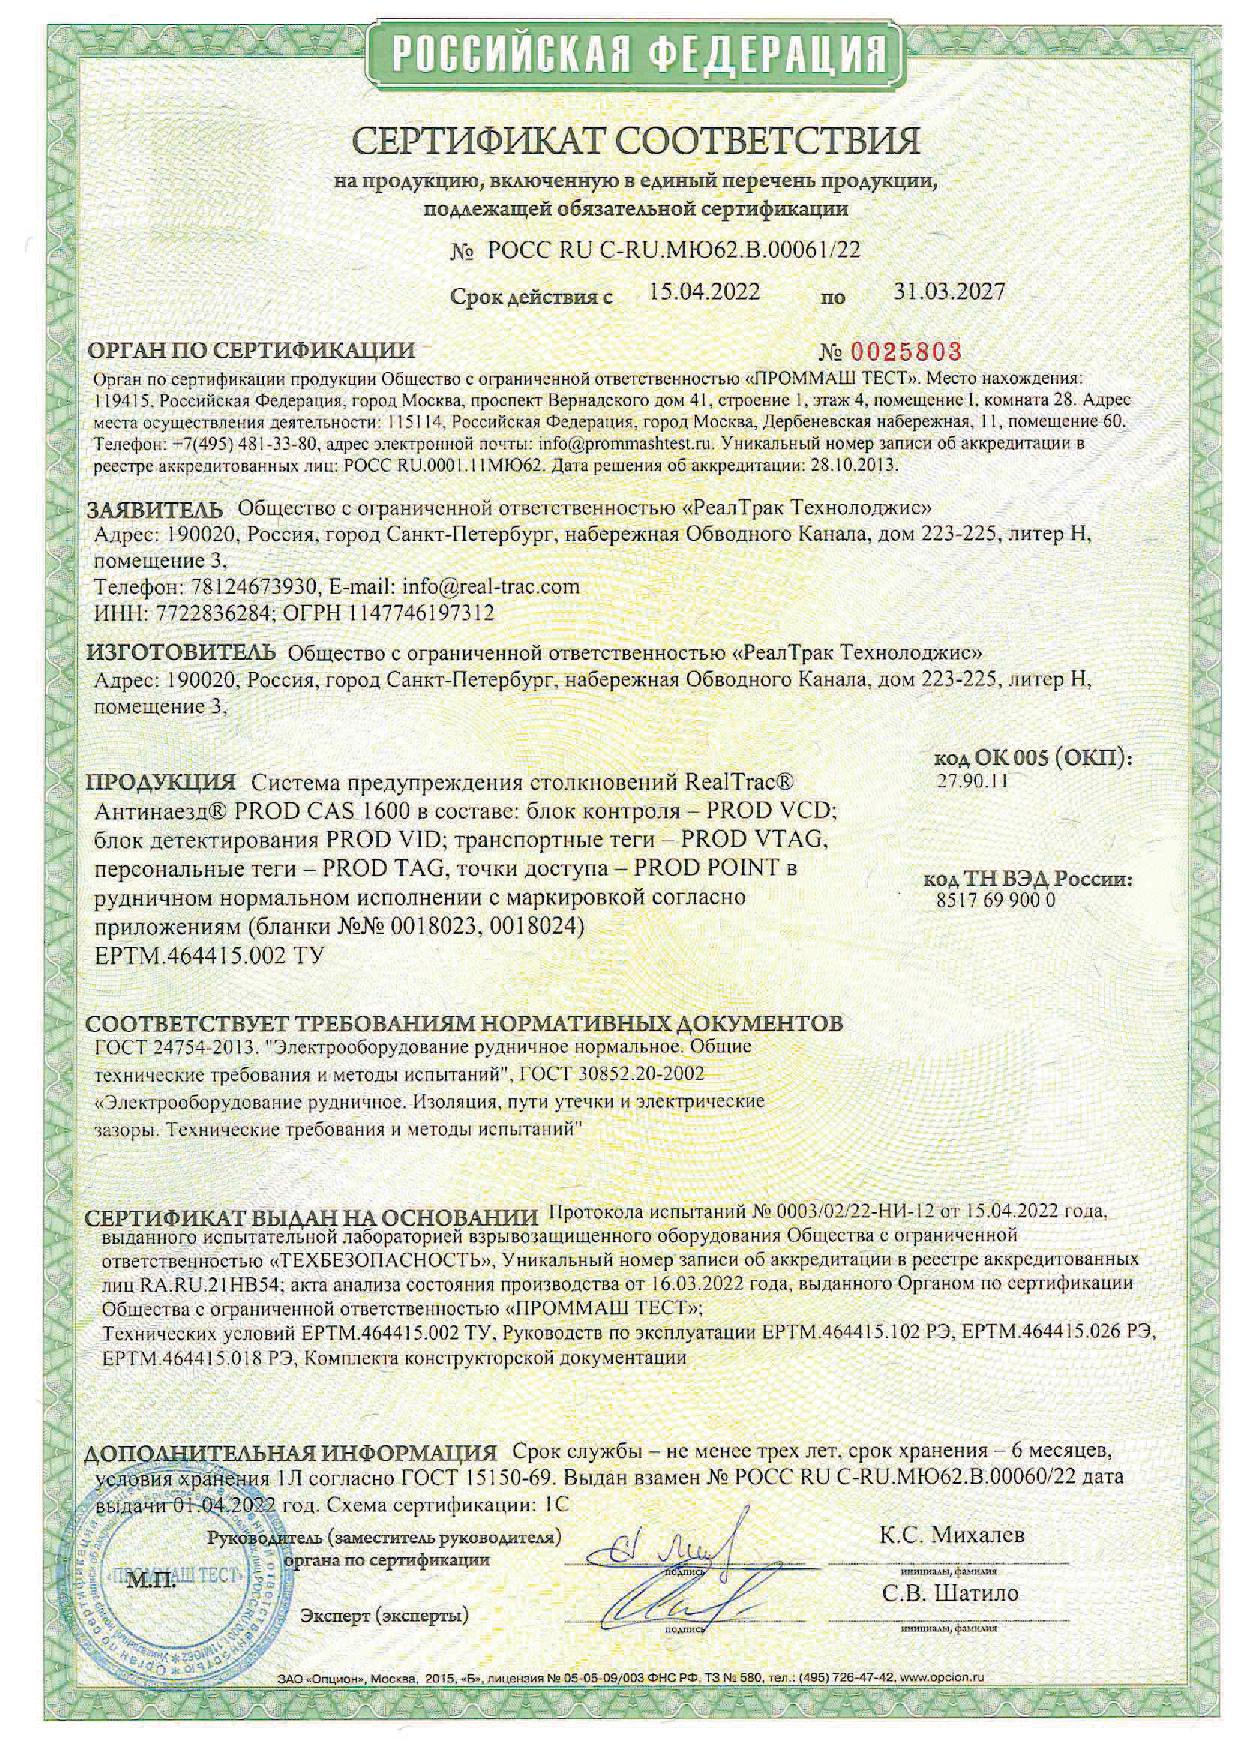 Сертификат РН1_VCD, VID, PP, PT, PV_до 31.03.2027.jpg